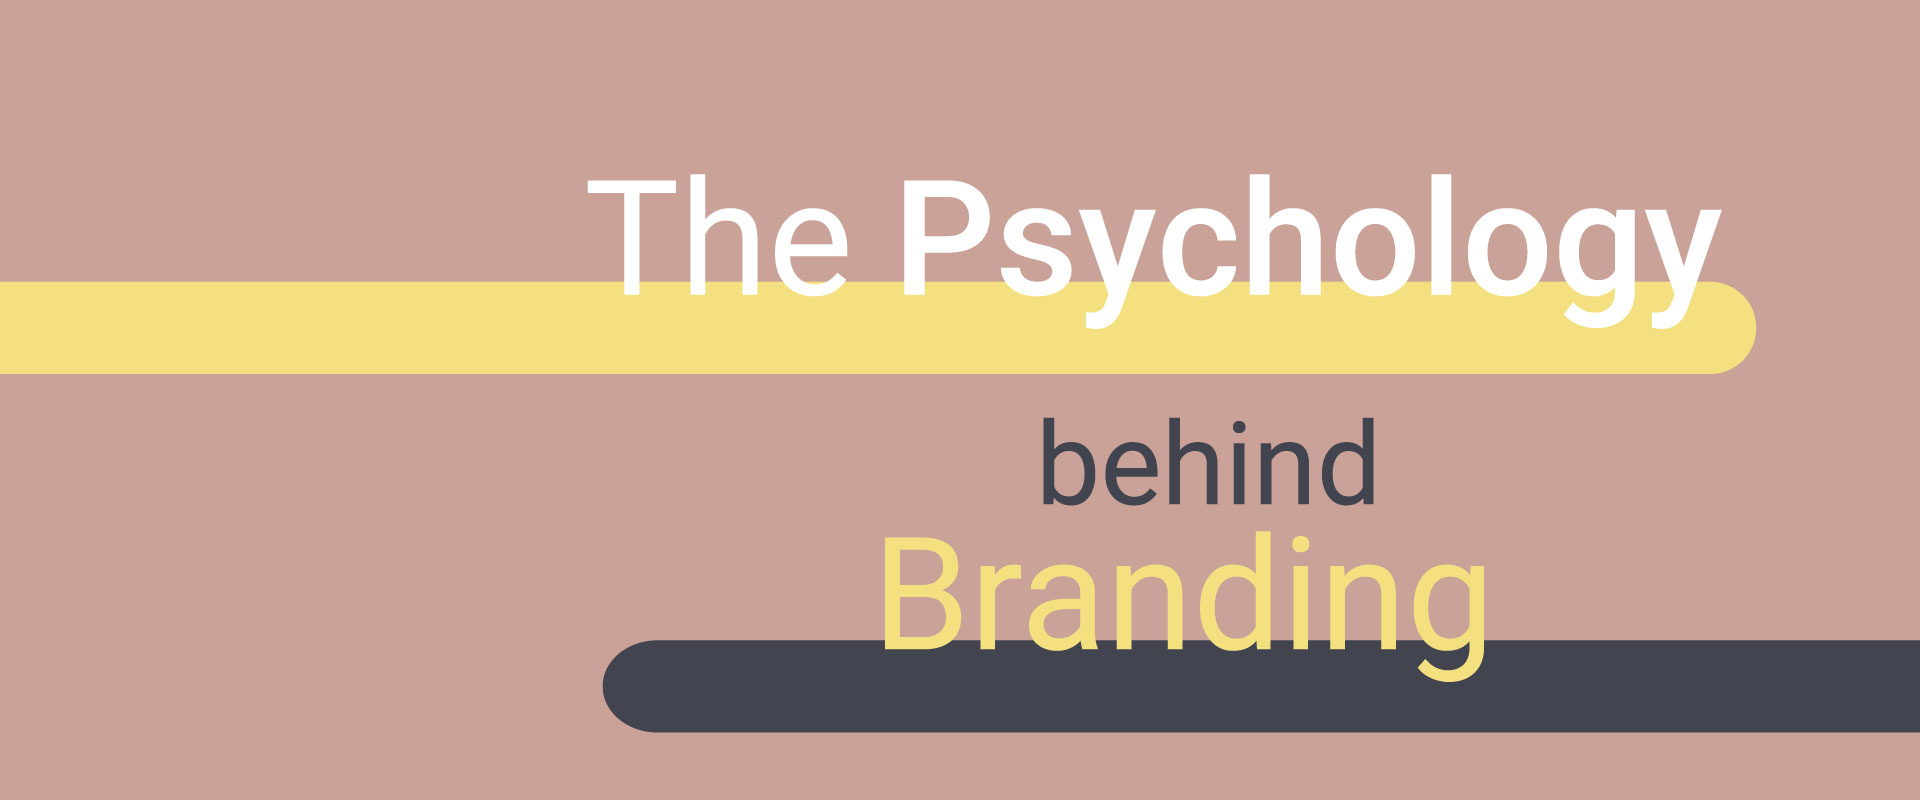 Psychology behind branding